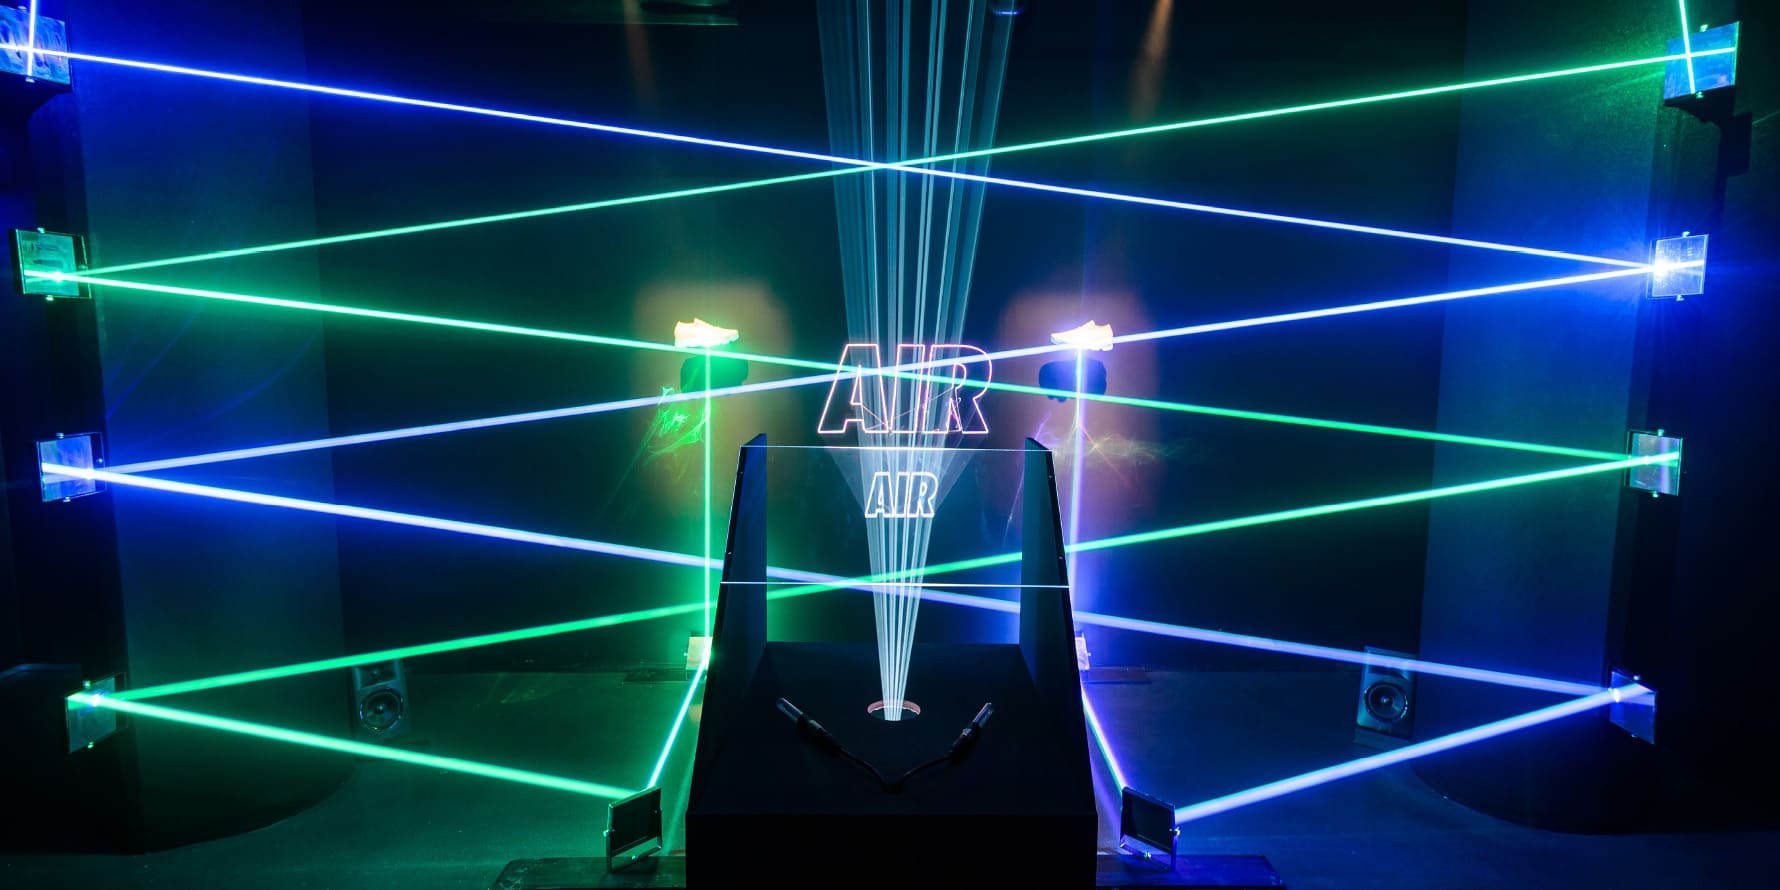 Nike Air Max lasers.